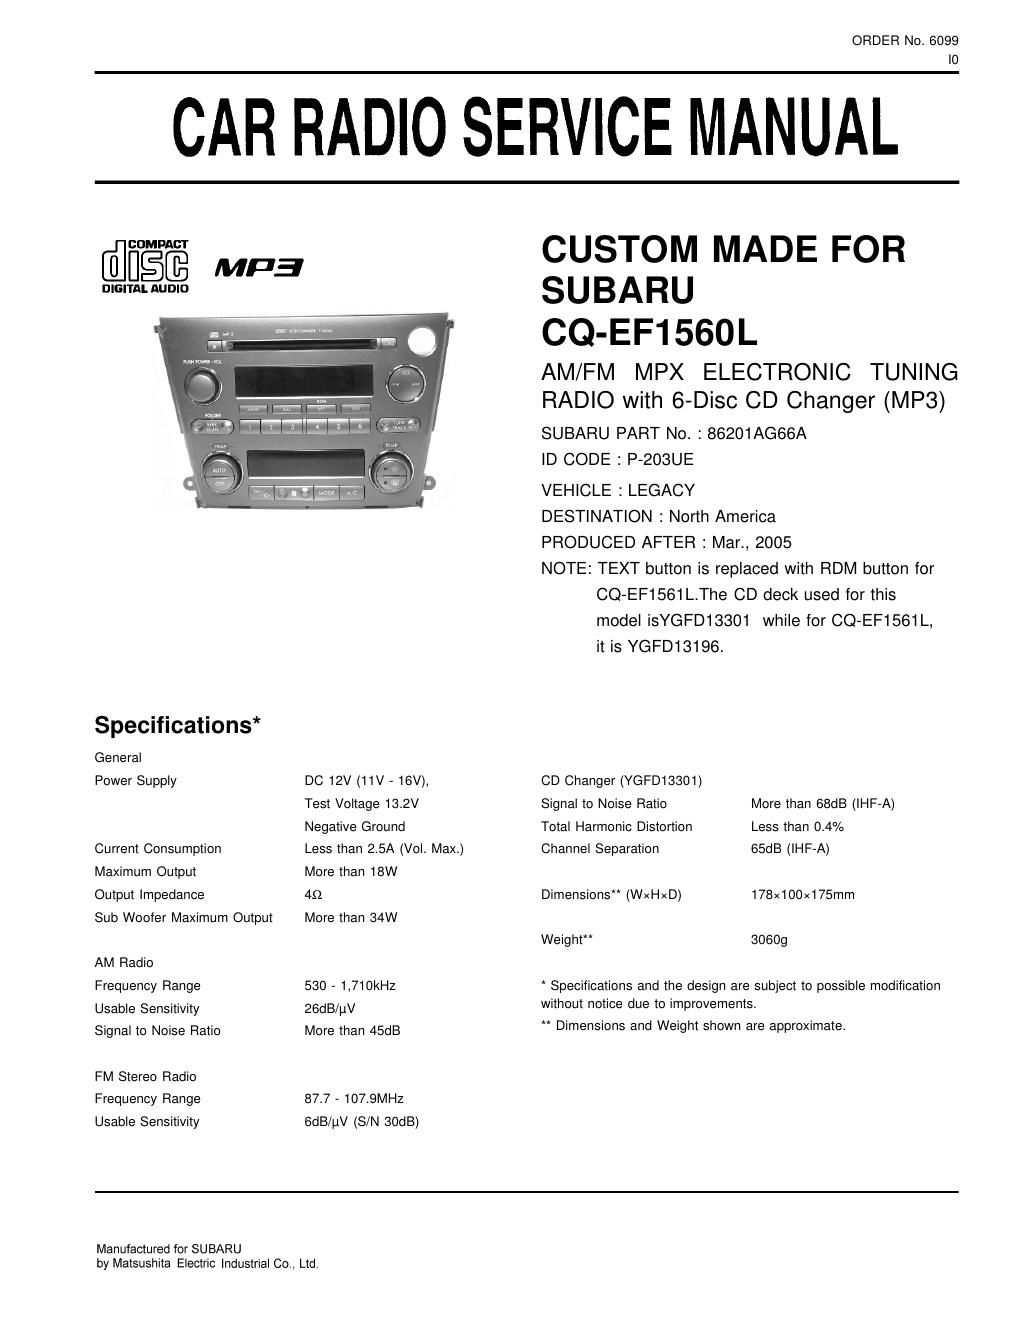 panasonic cq ef 1560 l service manual